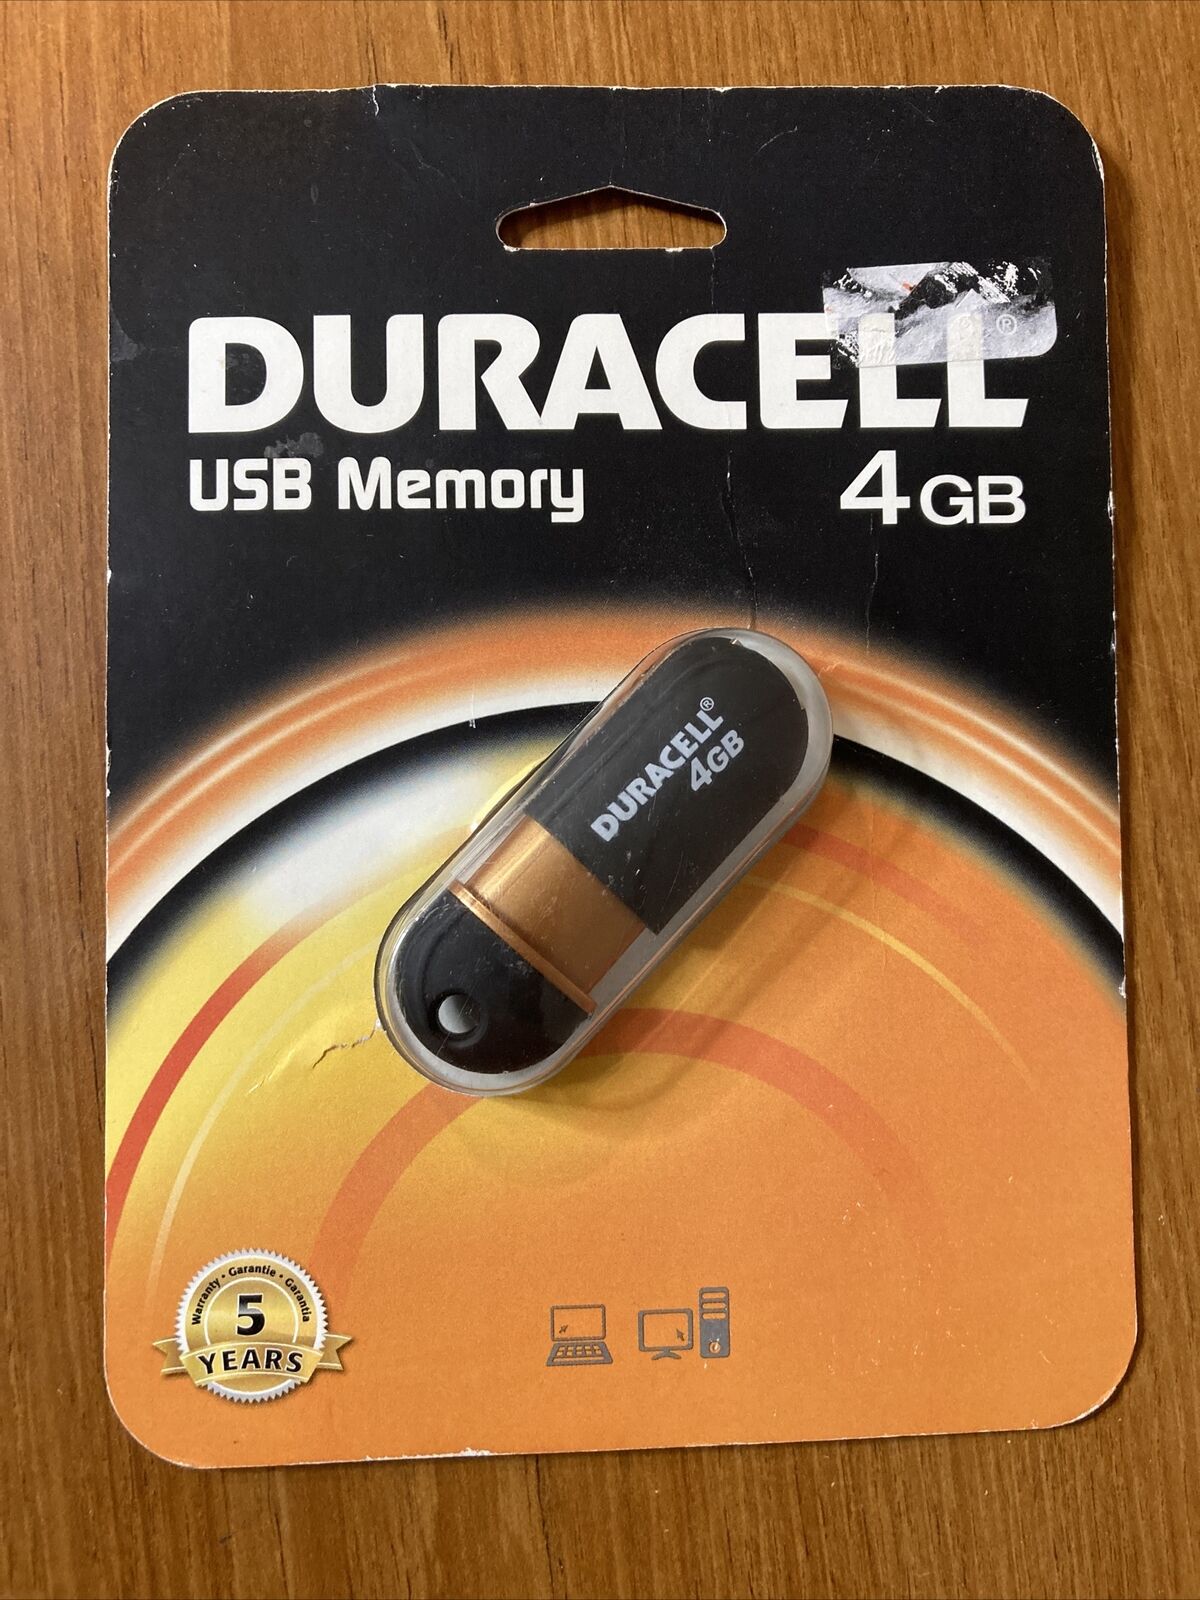 En smule halvø Nævne 4GB Duracell USB Memory Flash Drive - Brand New Sealed 804272729160 | eBay